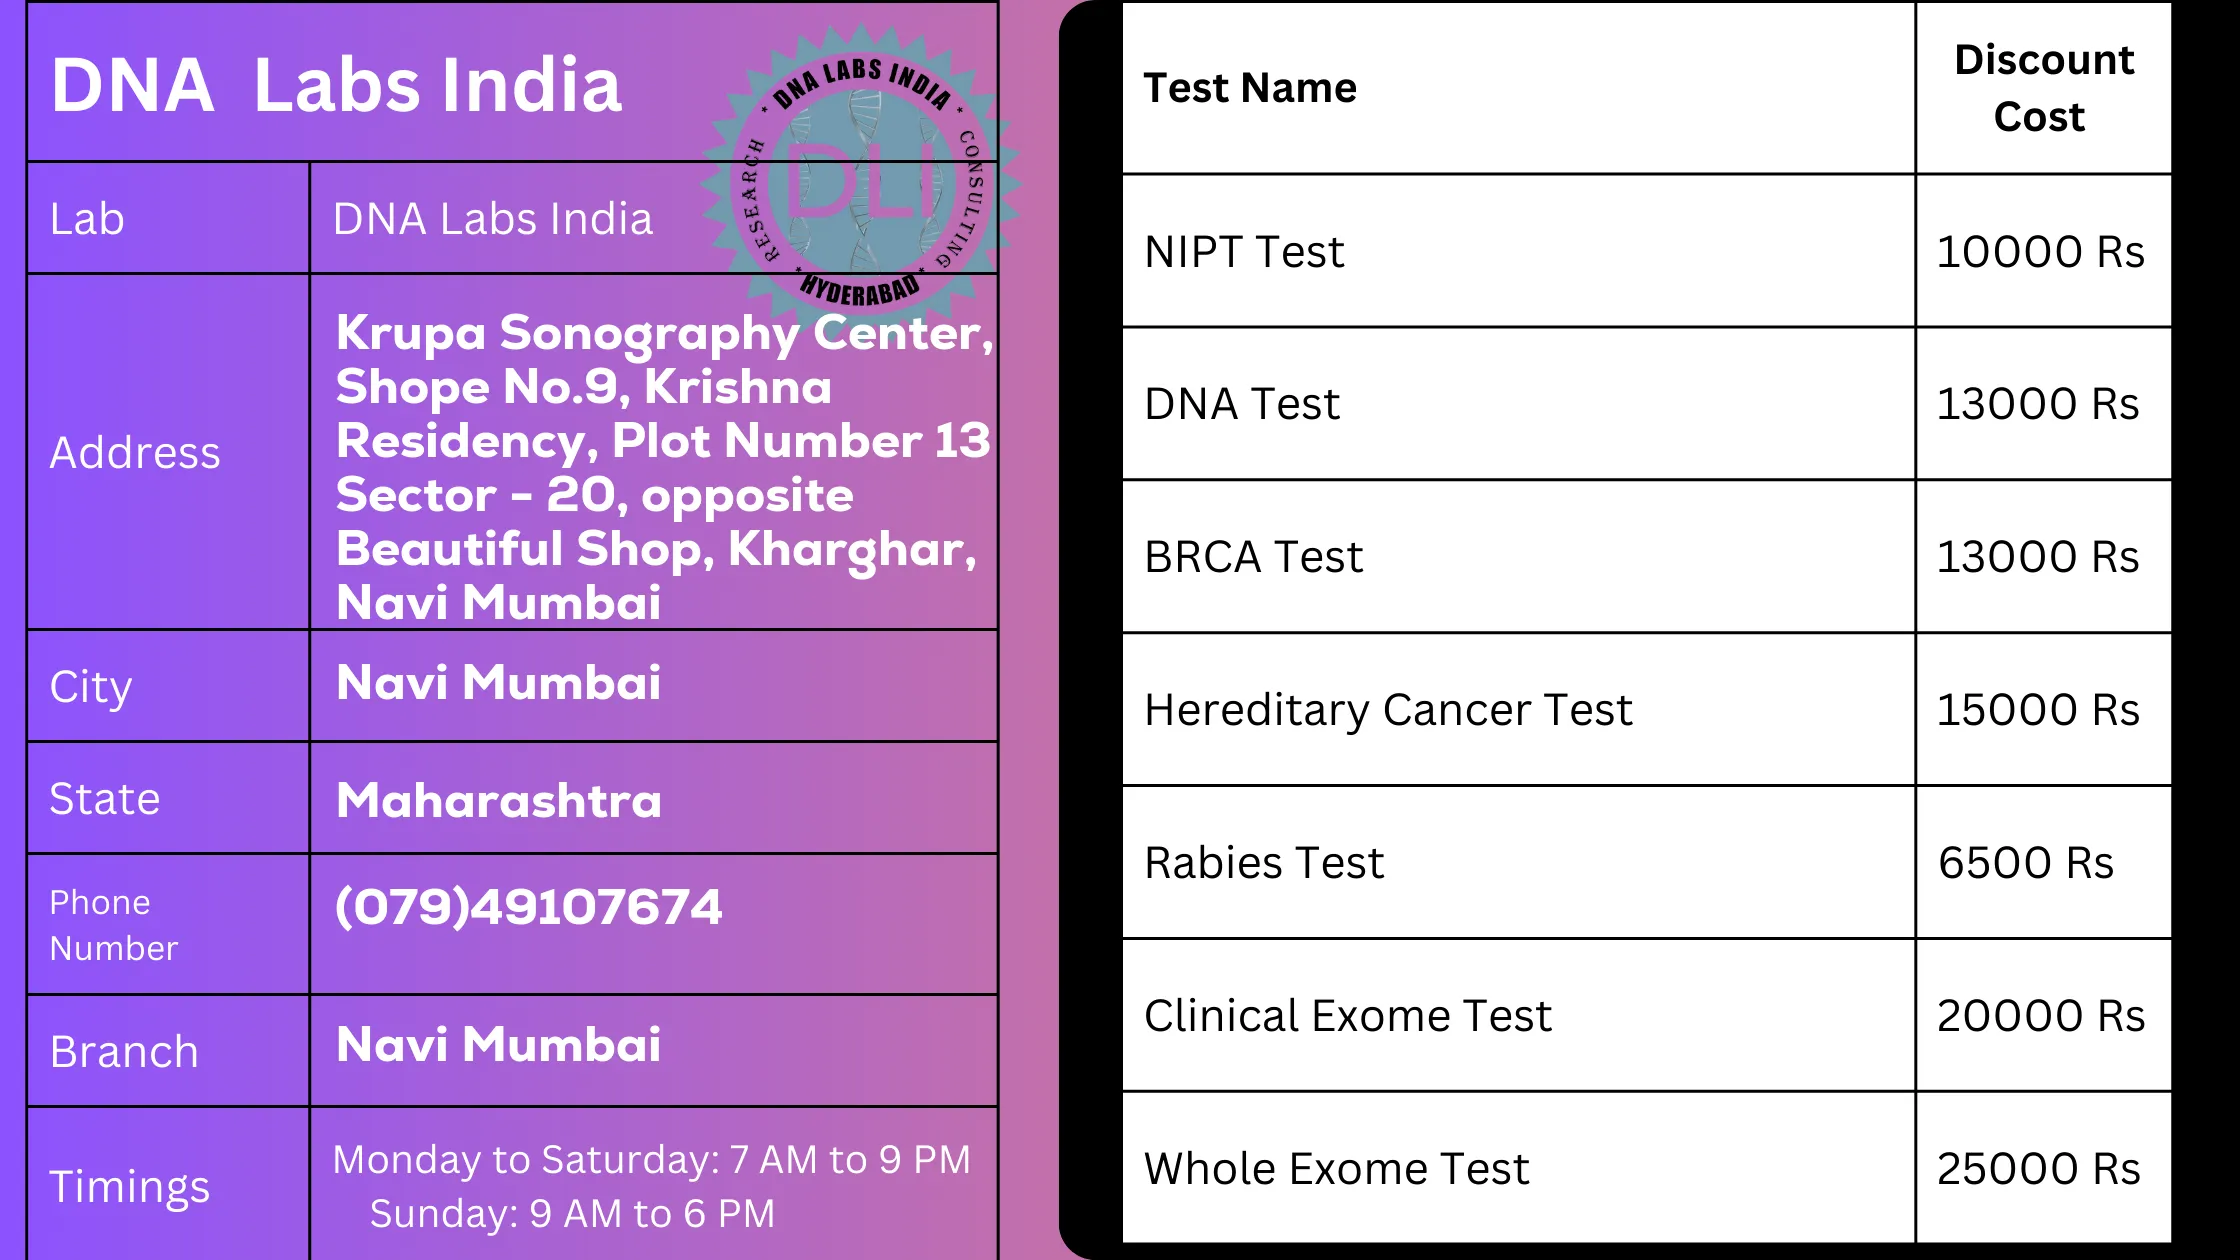 DNA Labs India - Navi Mumbai: Your Trusted Partner for Genetic Testingn